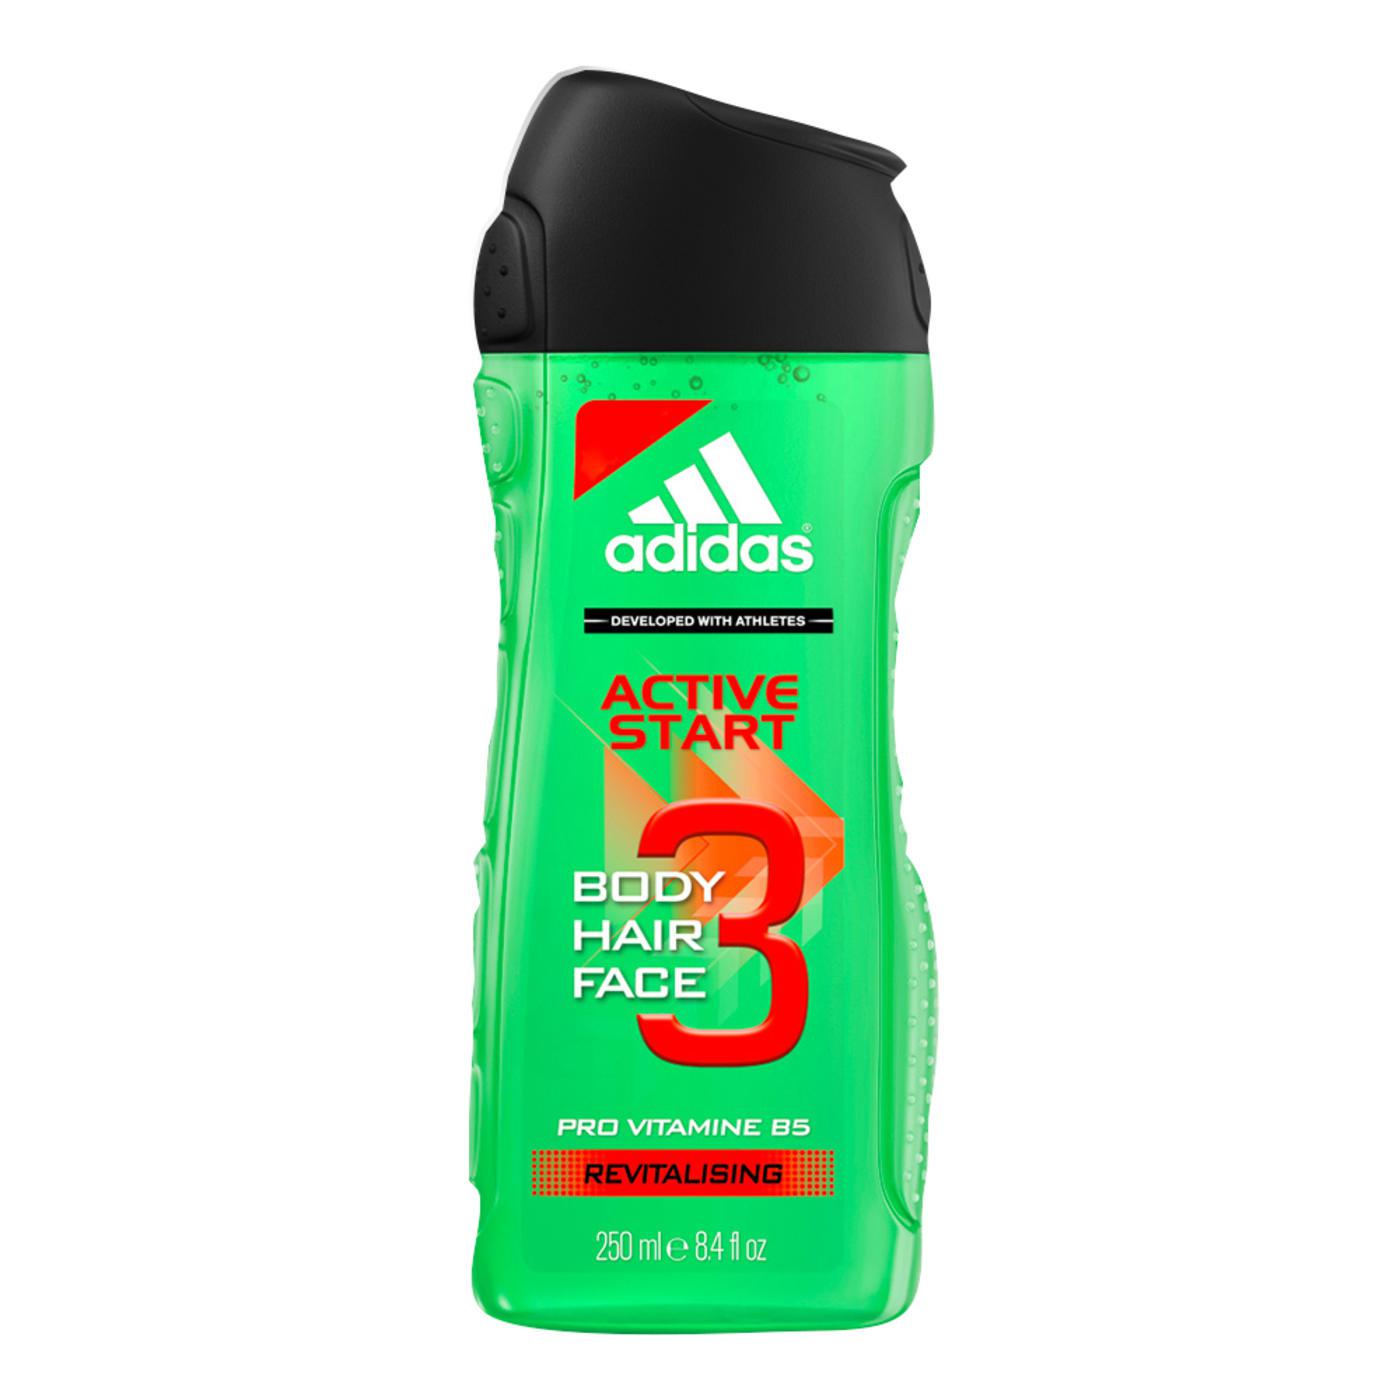 adidas hair and body shower gel